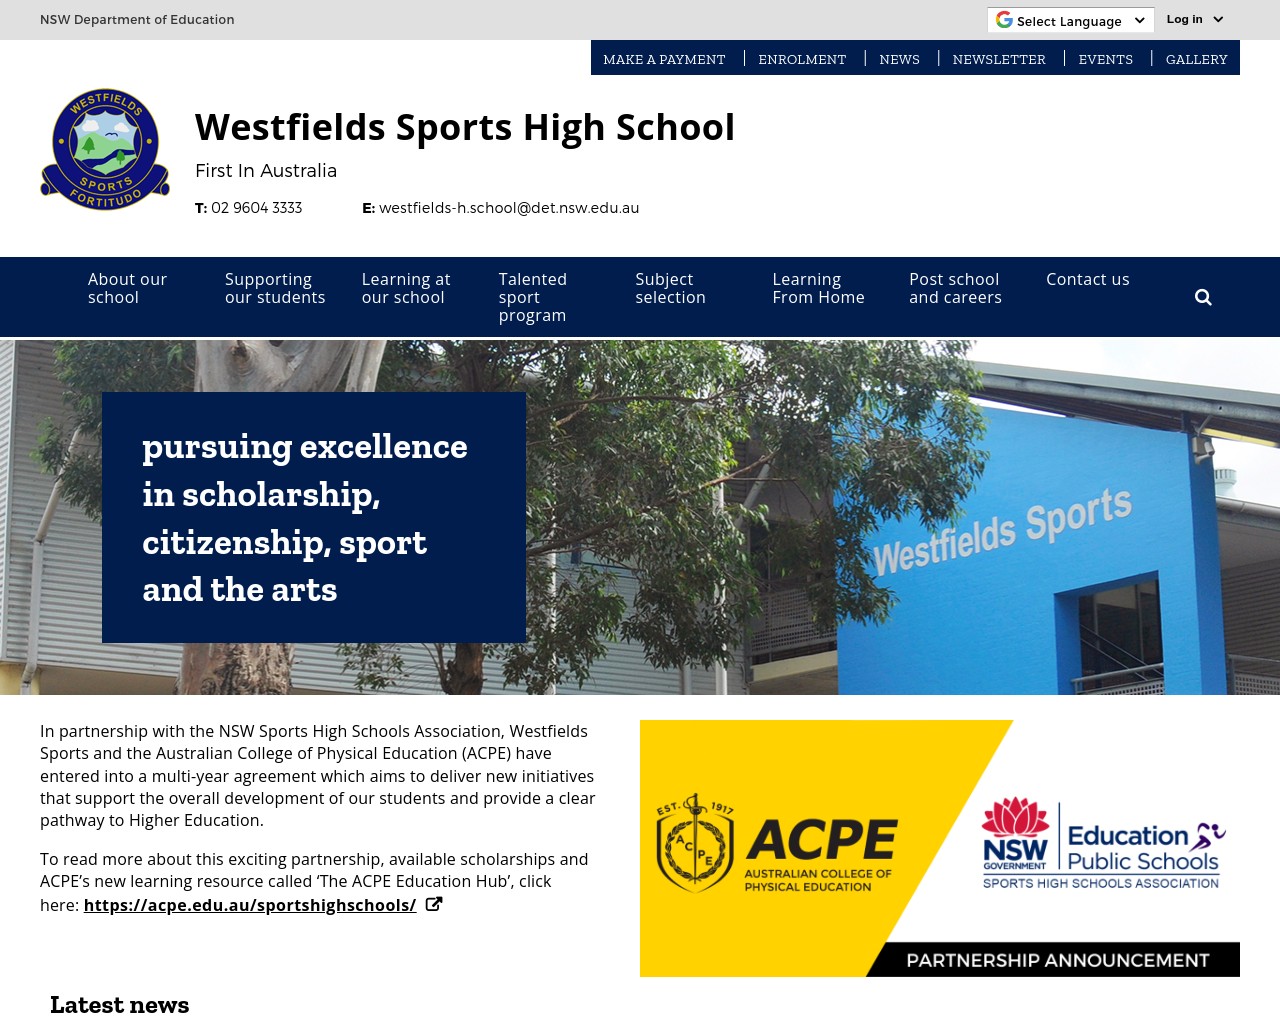 Westfield Sports High School